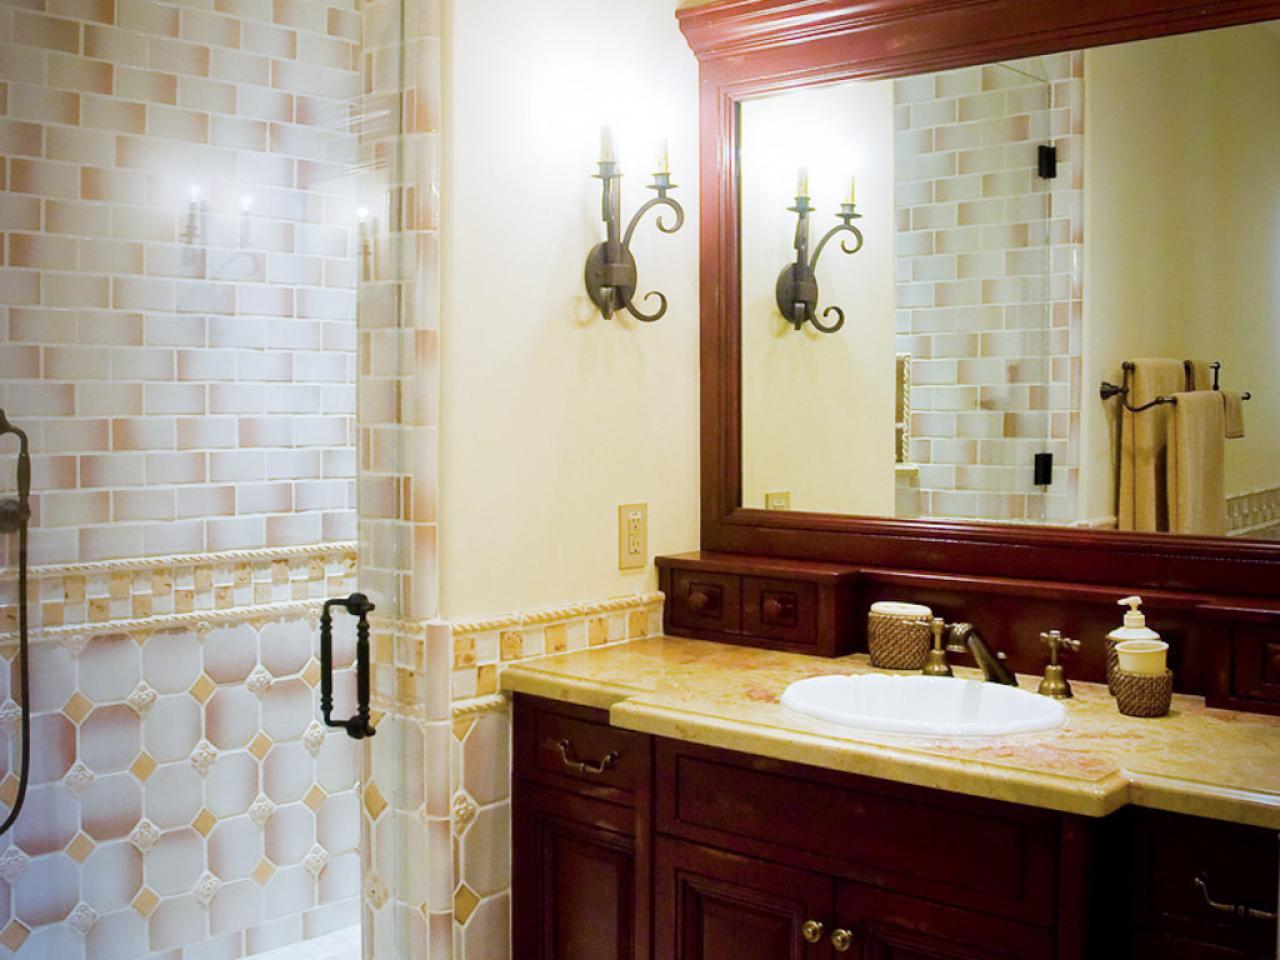 Original_Milk-and-Honey-Design-bathroom-tile-detail-vanity_4x3.jpg.rend.hgtvcom.1280.960